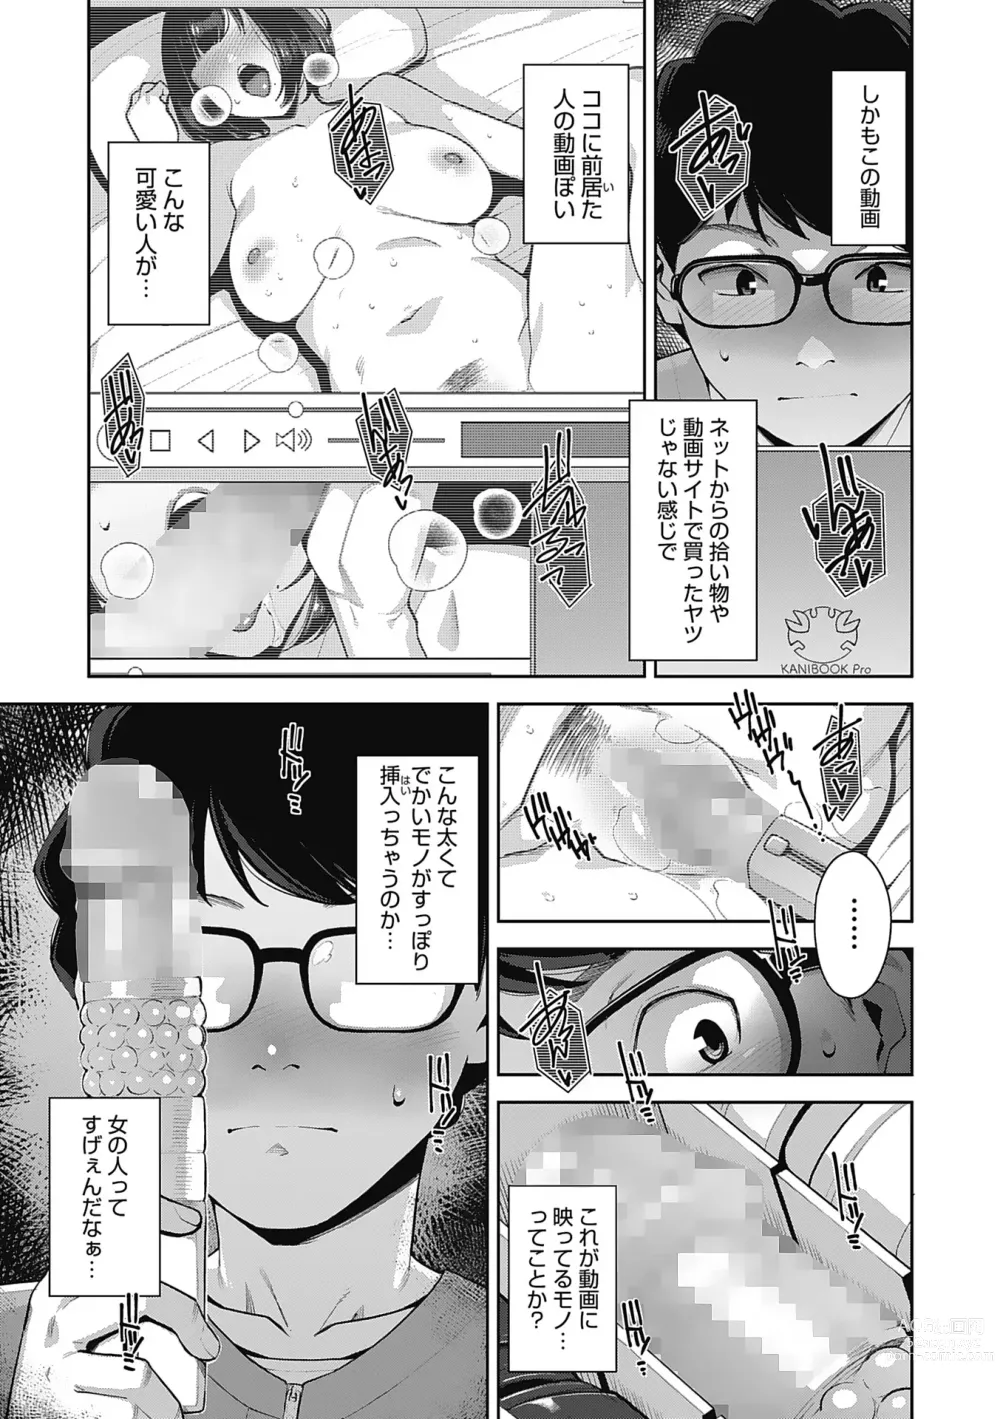 Page 5 of manga Hatsujou Contrast